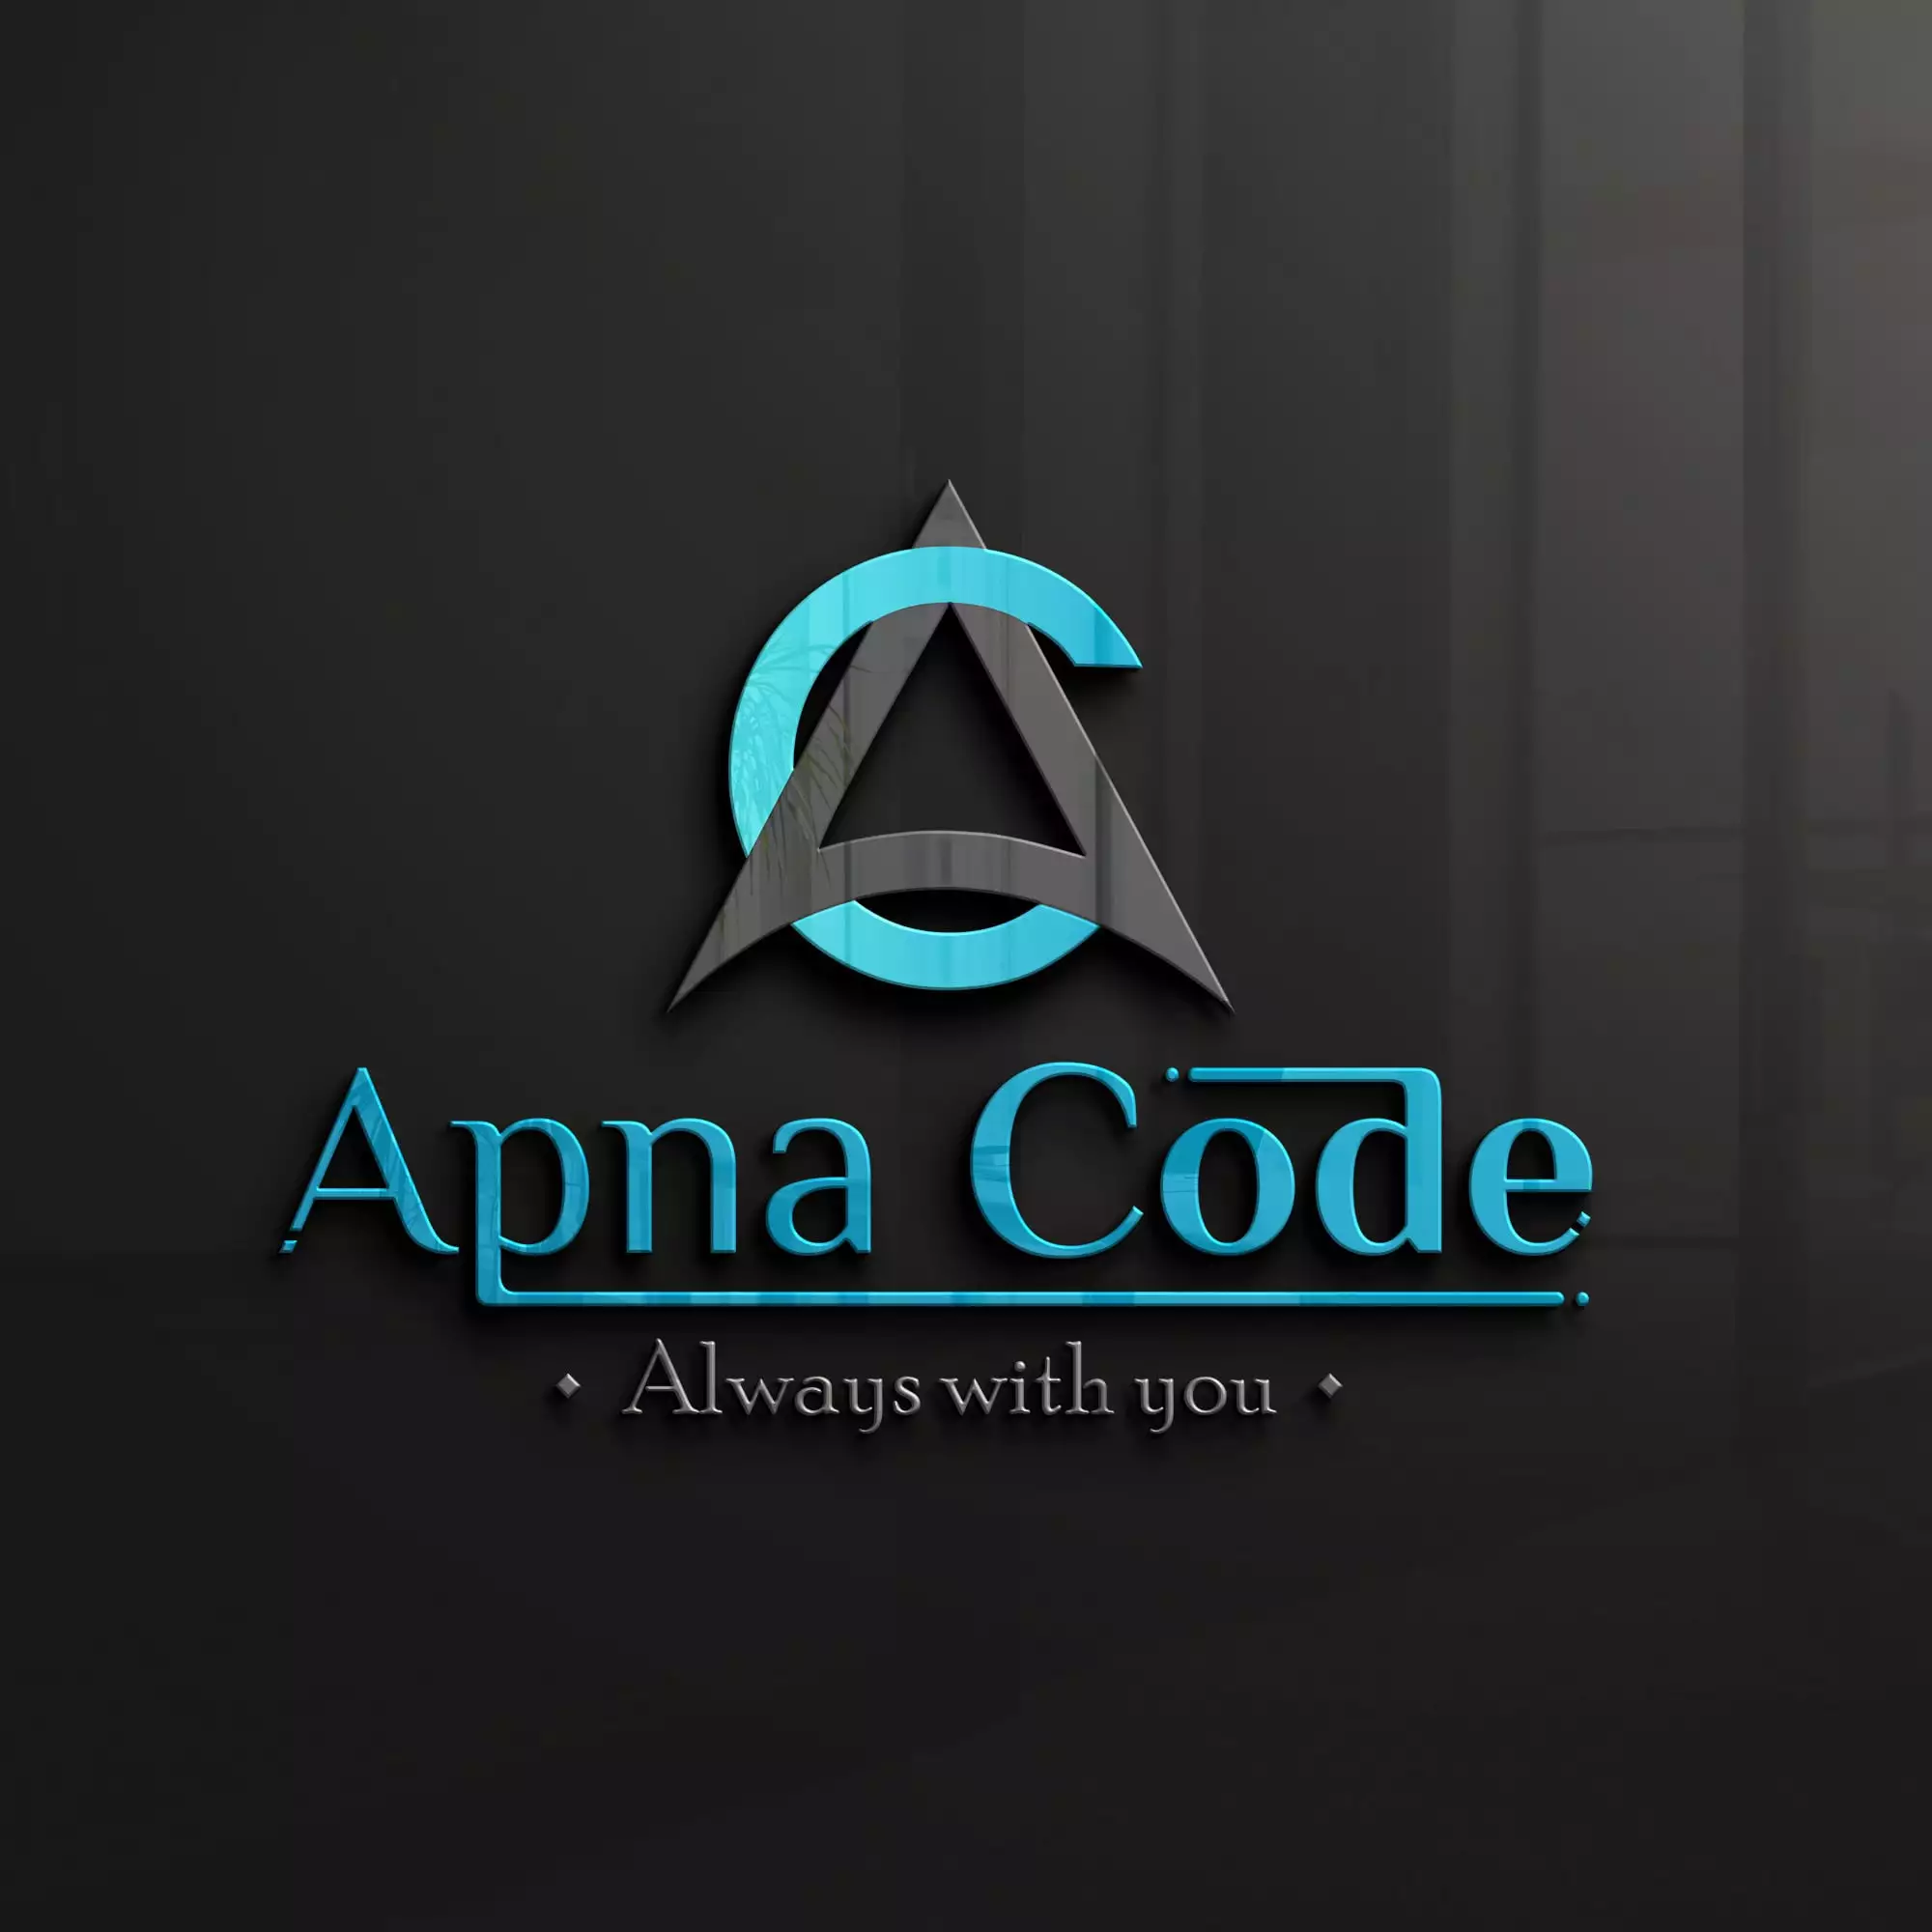 Apna Code